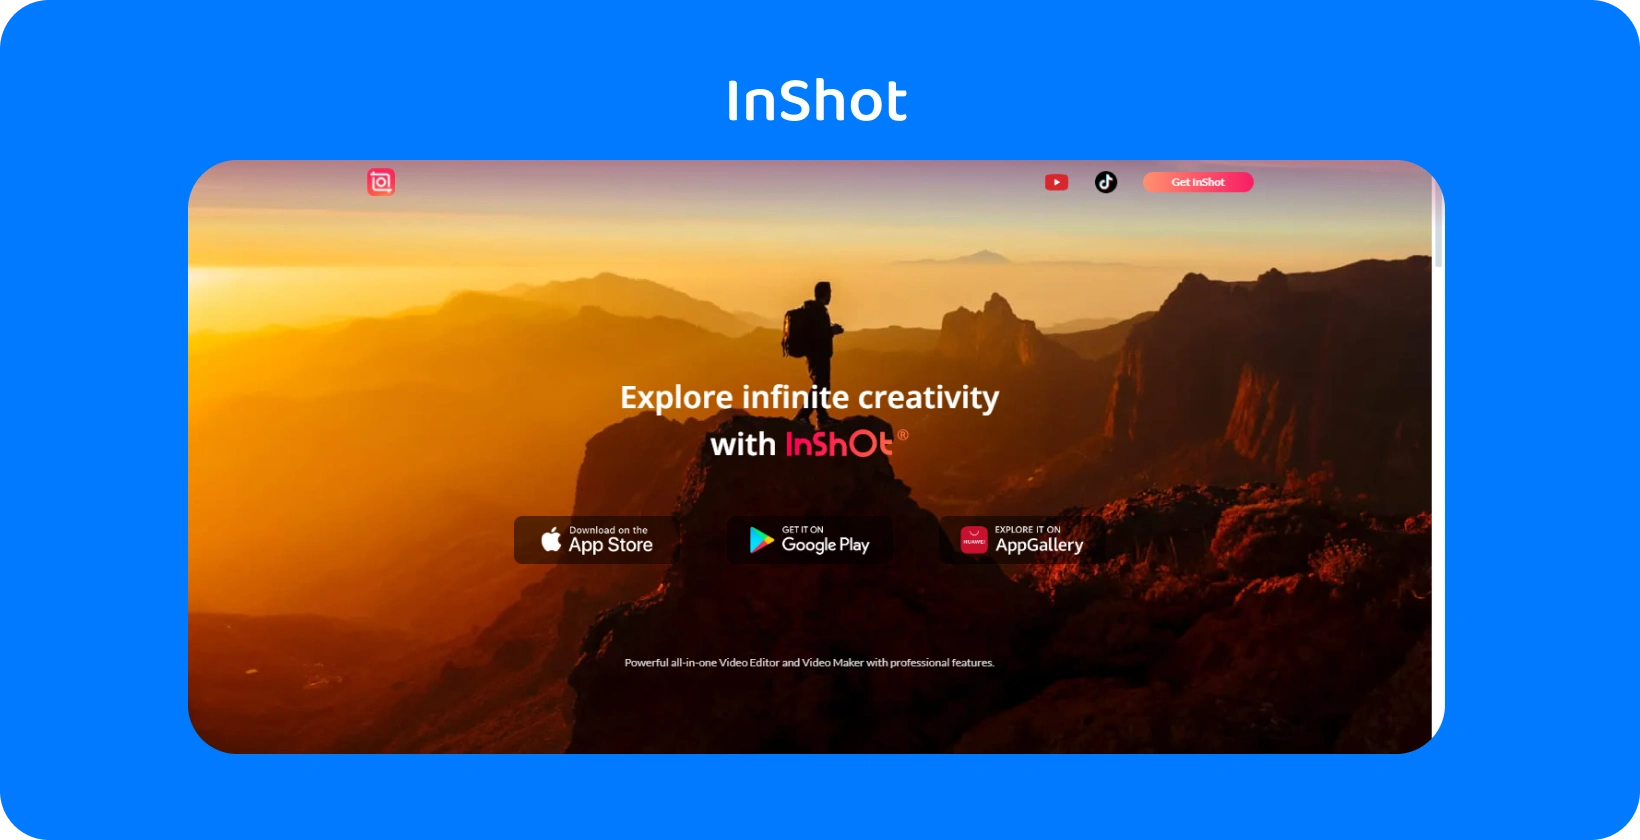 InShot διαφήμιση της εφαρμογής που παρουσιάζει έναν πεζοπόρο στο ηλιοβασίλεμα, συμβολίζοντας την υπόσχεση της εφαρμογής να εξερευνήσει την άπειρη δημιουργικότητα στην επεξεργασία βίντεο.
